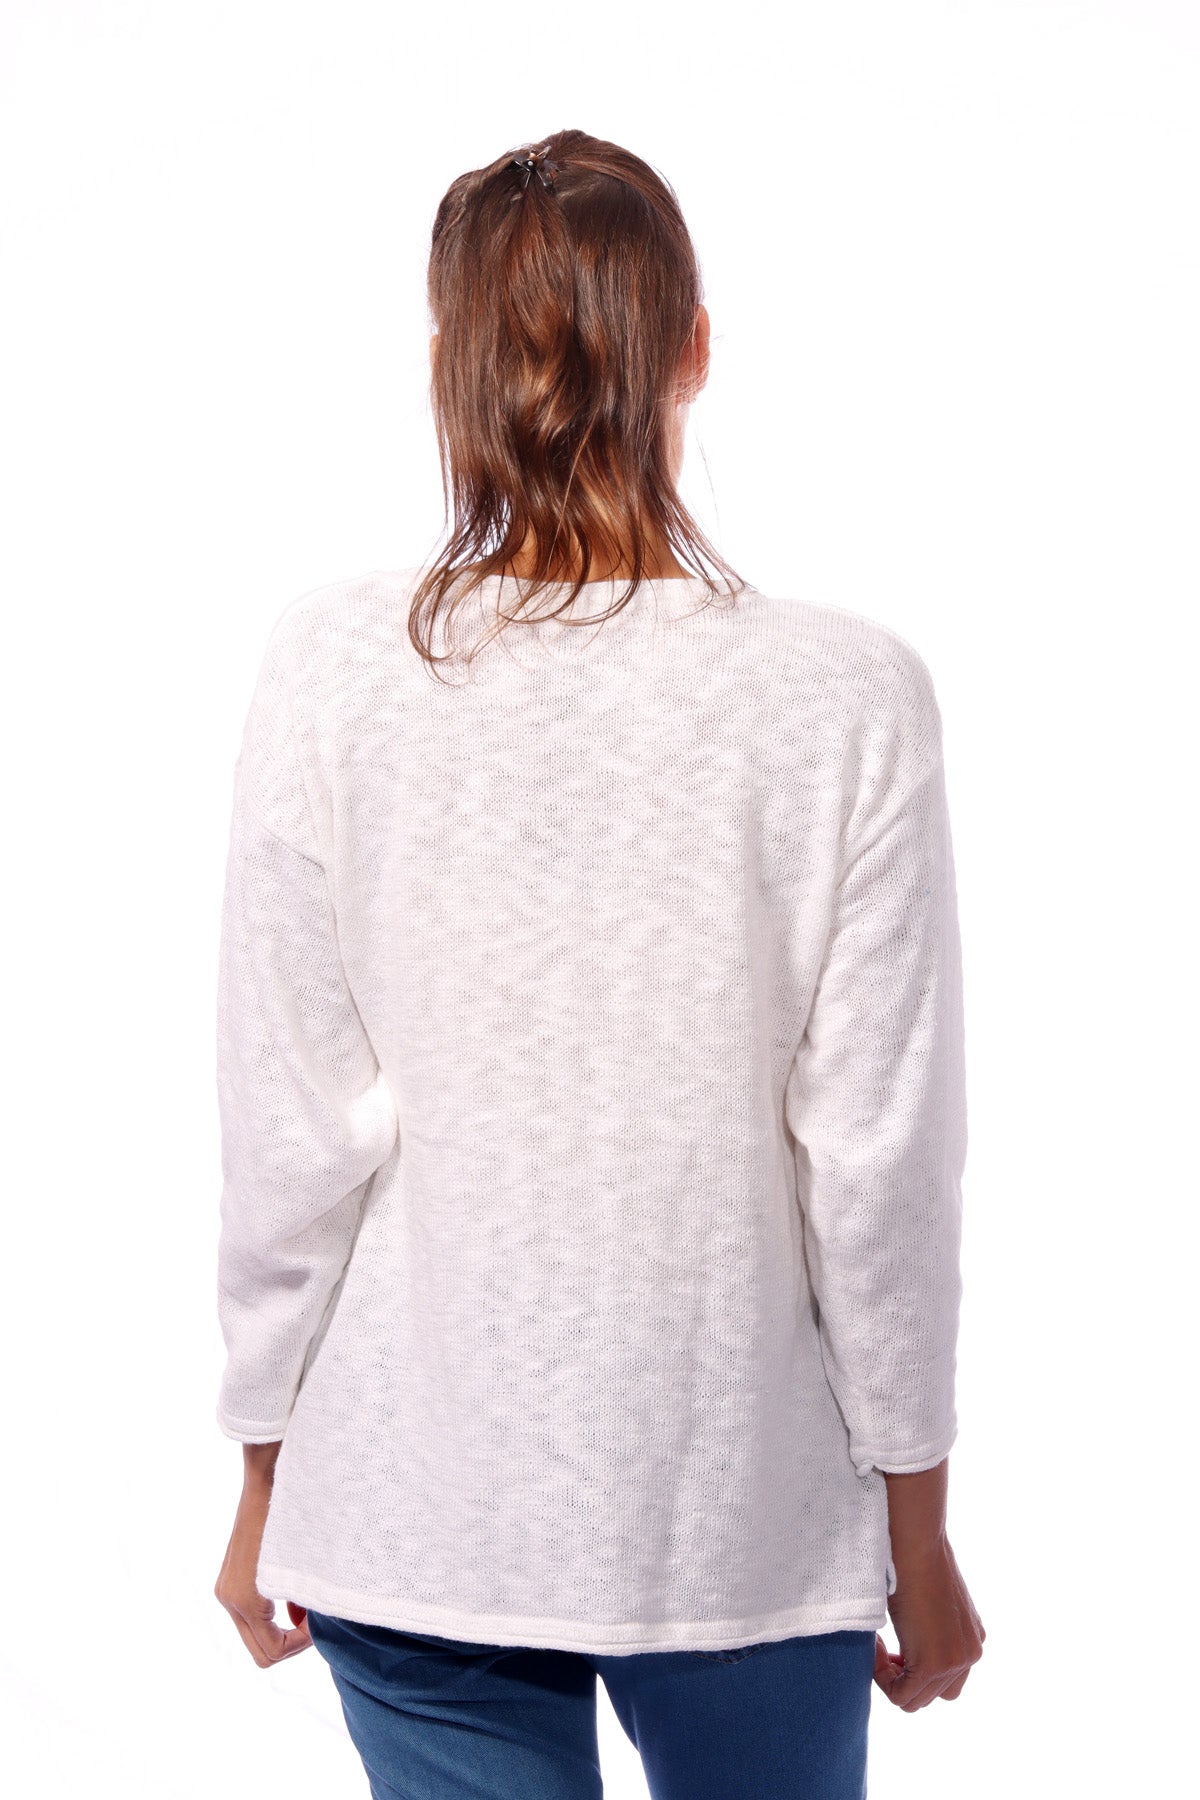 001- LuLu B Rolled Edge 1 Pocket Sweater - White